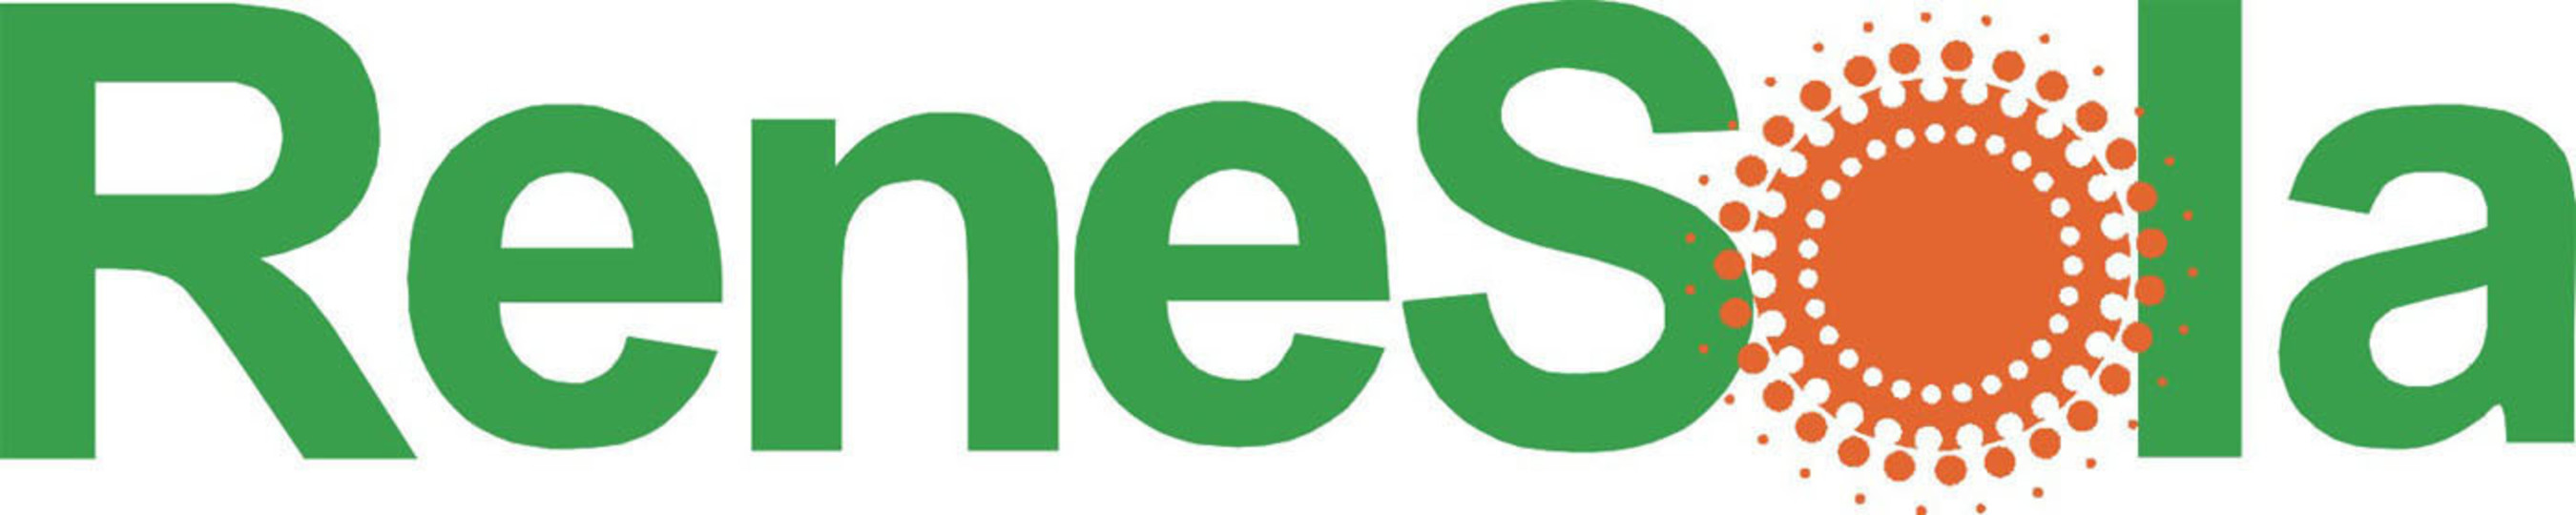 ReneSola Logo. (PRNewsFoto/ReneSola Ltd) (PRNewsFoto/)